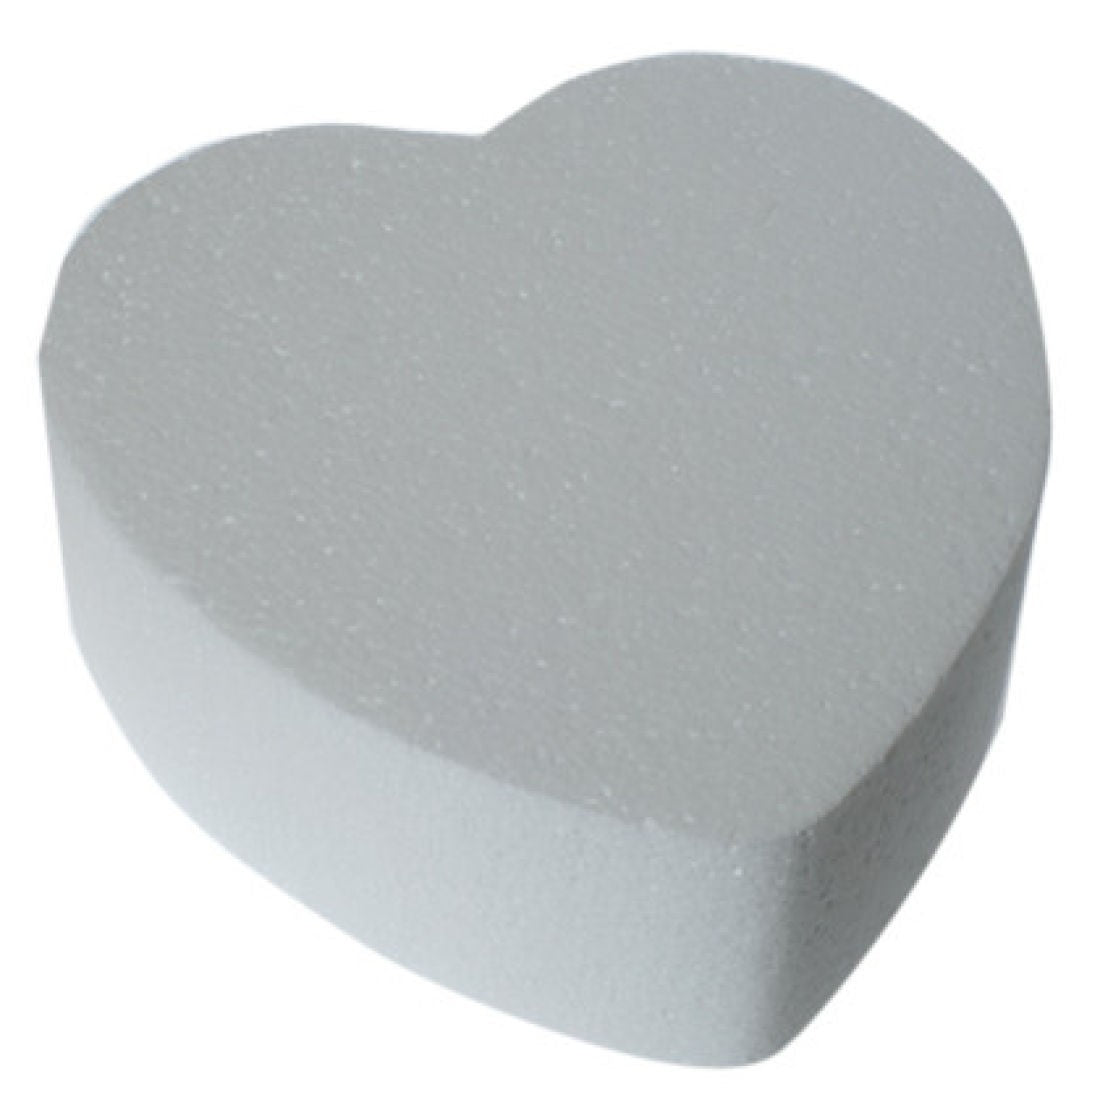 Styrofoam Hearts (Pack of 50)